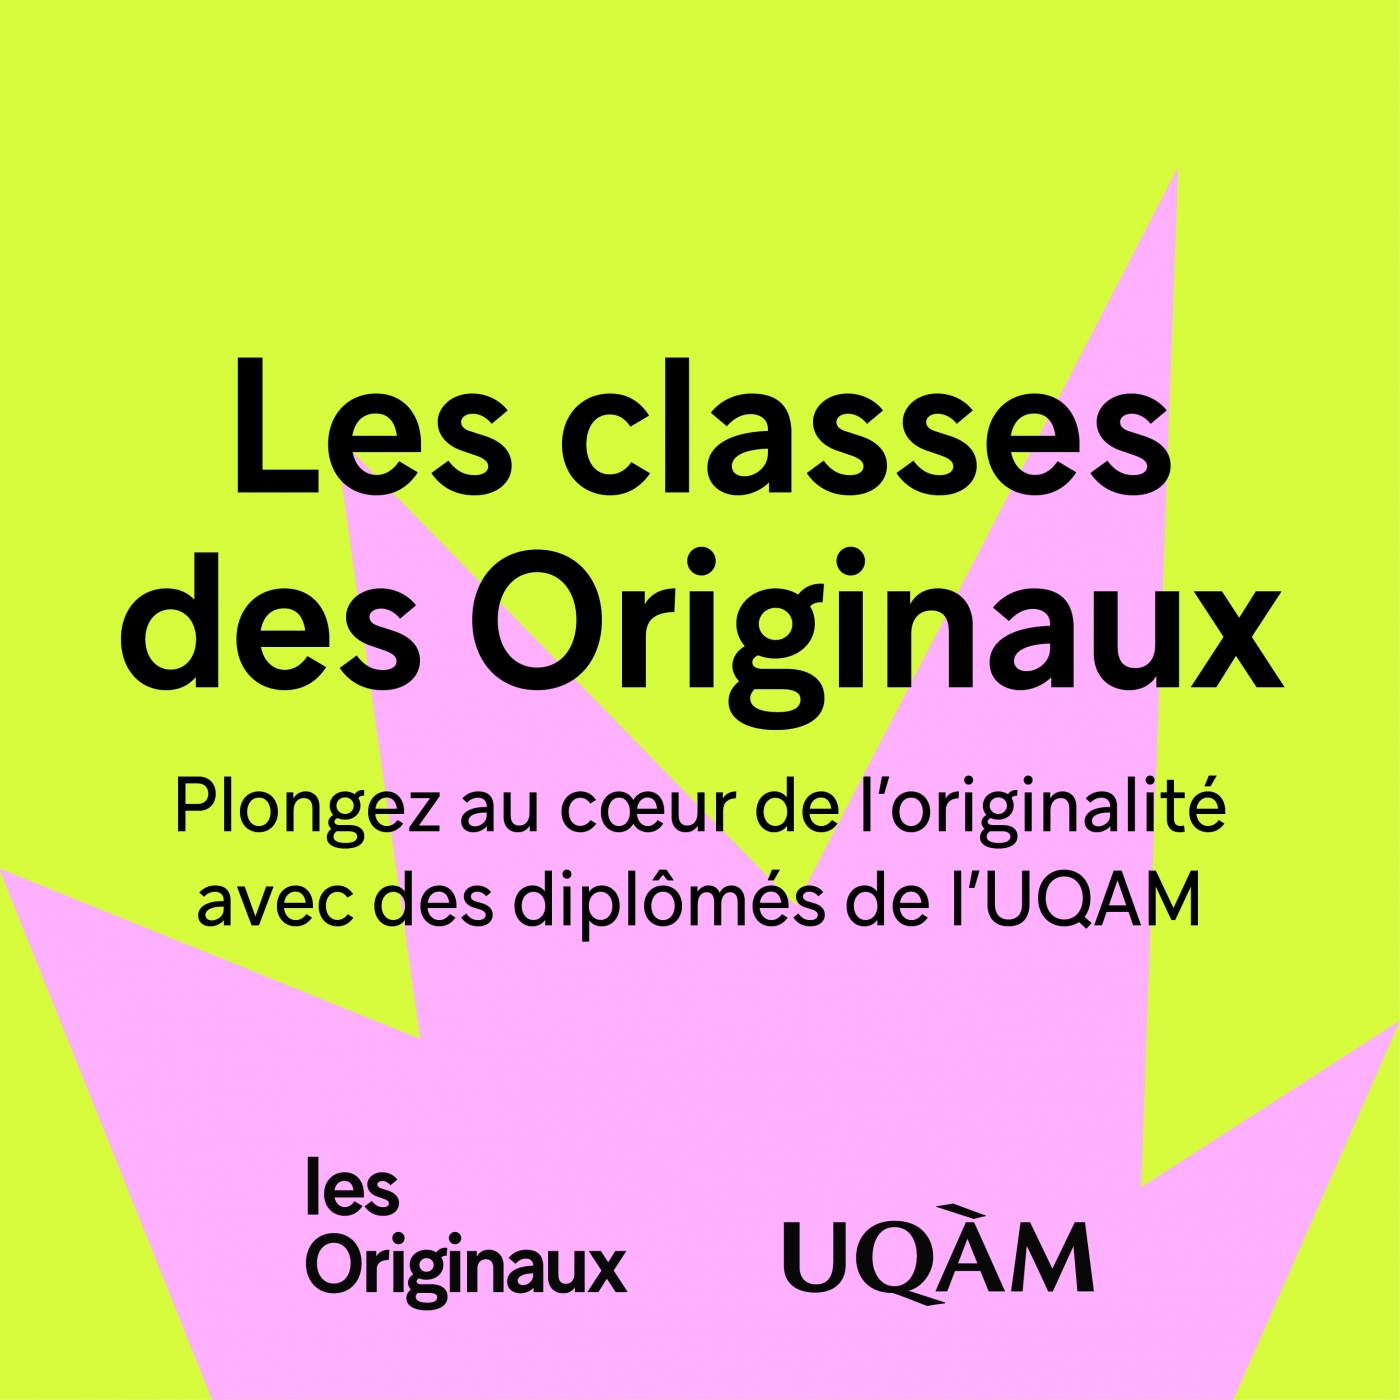 Les classes des Originaux de l’UQAM